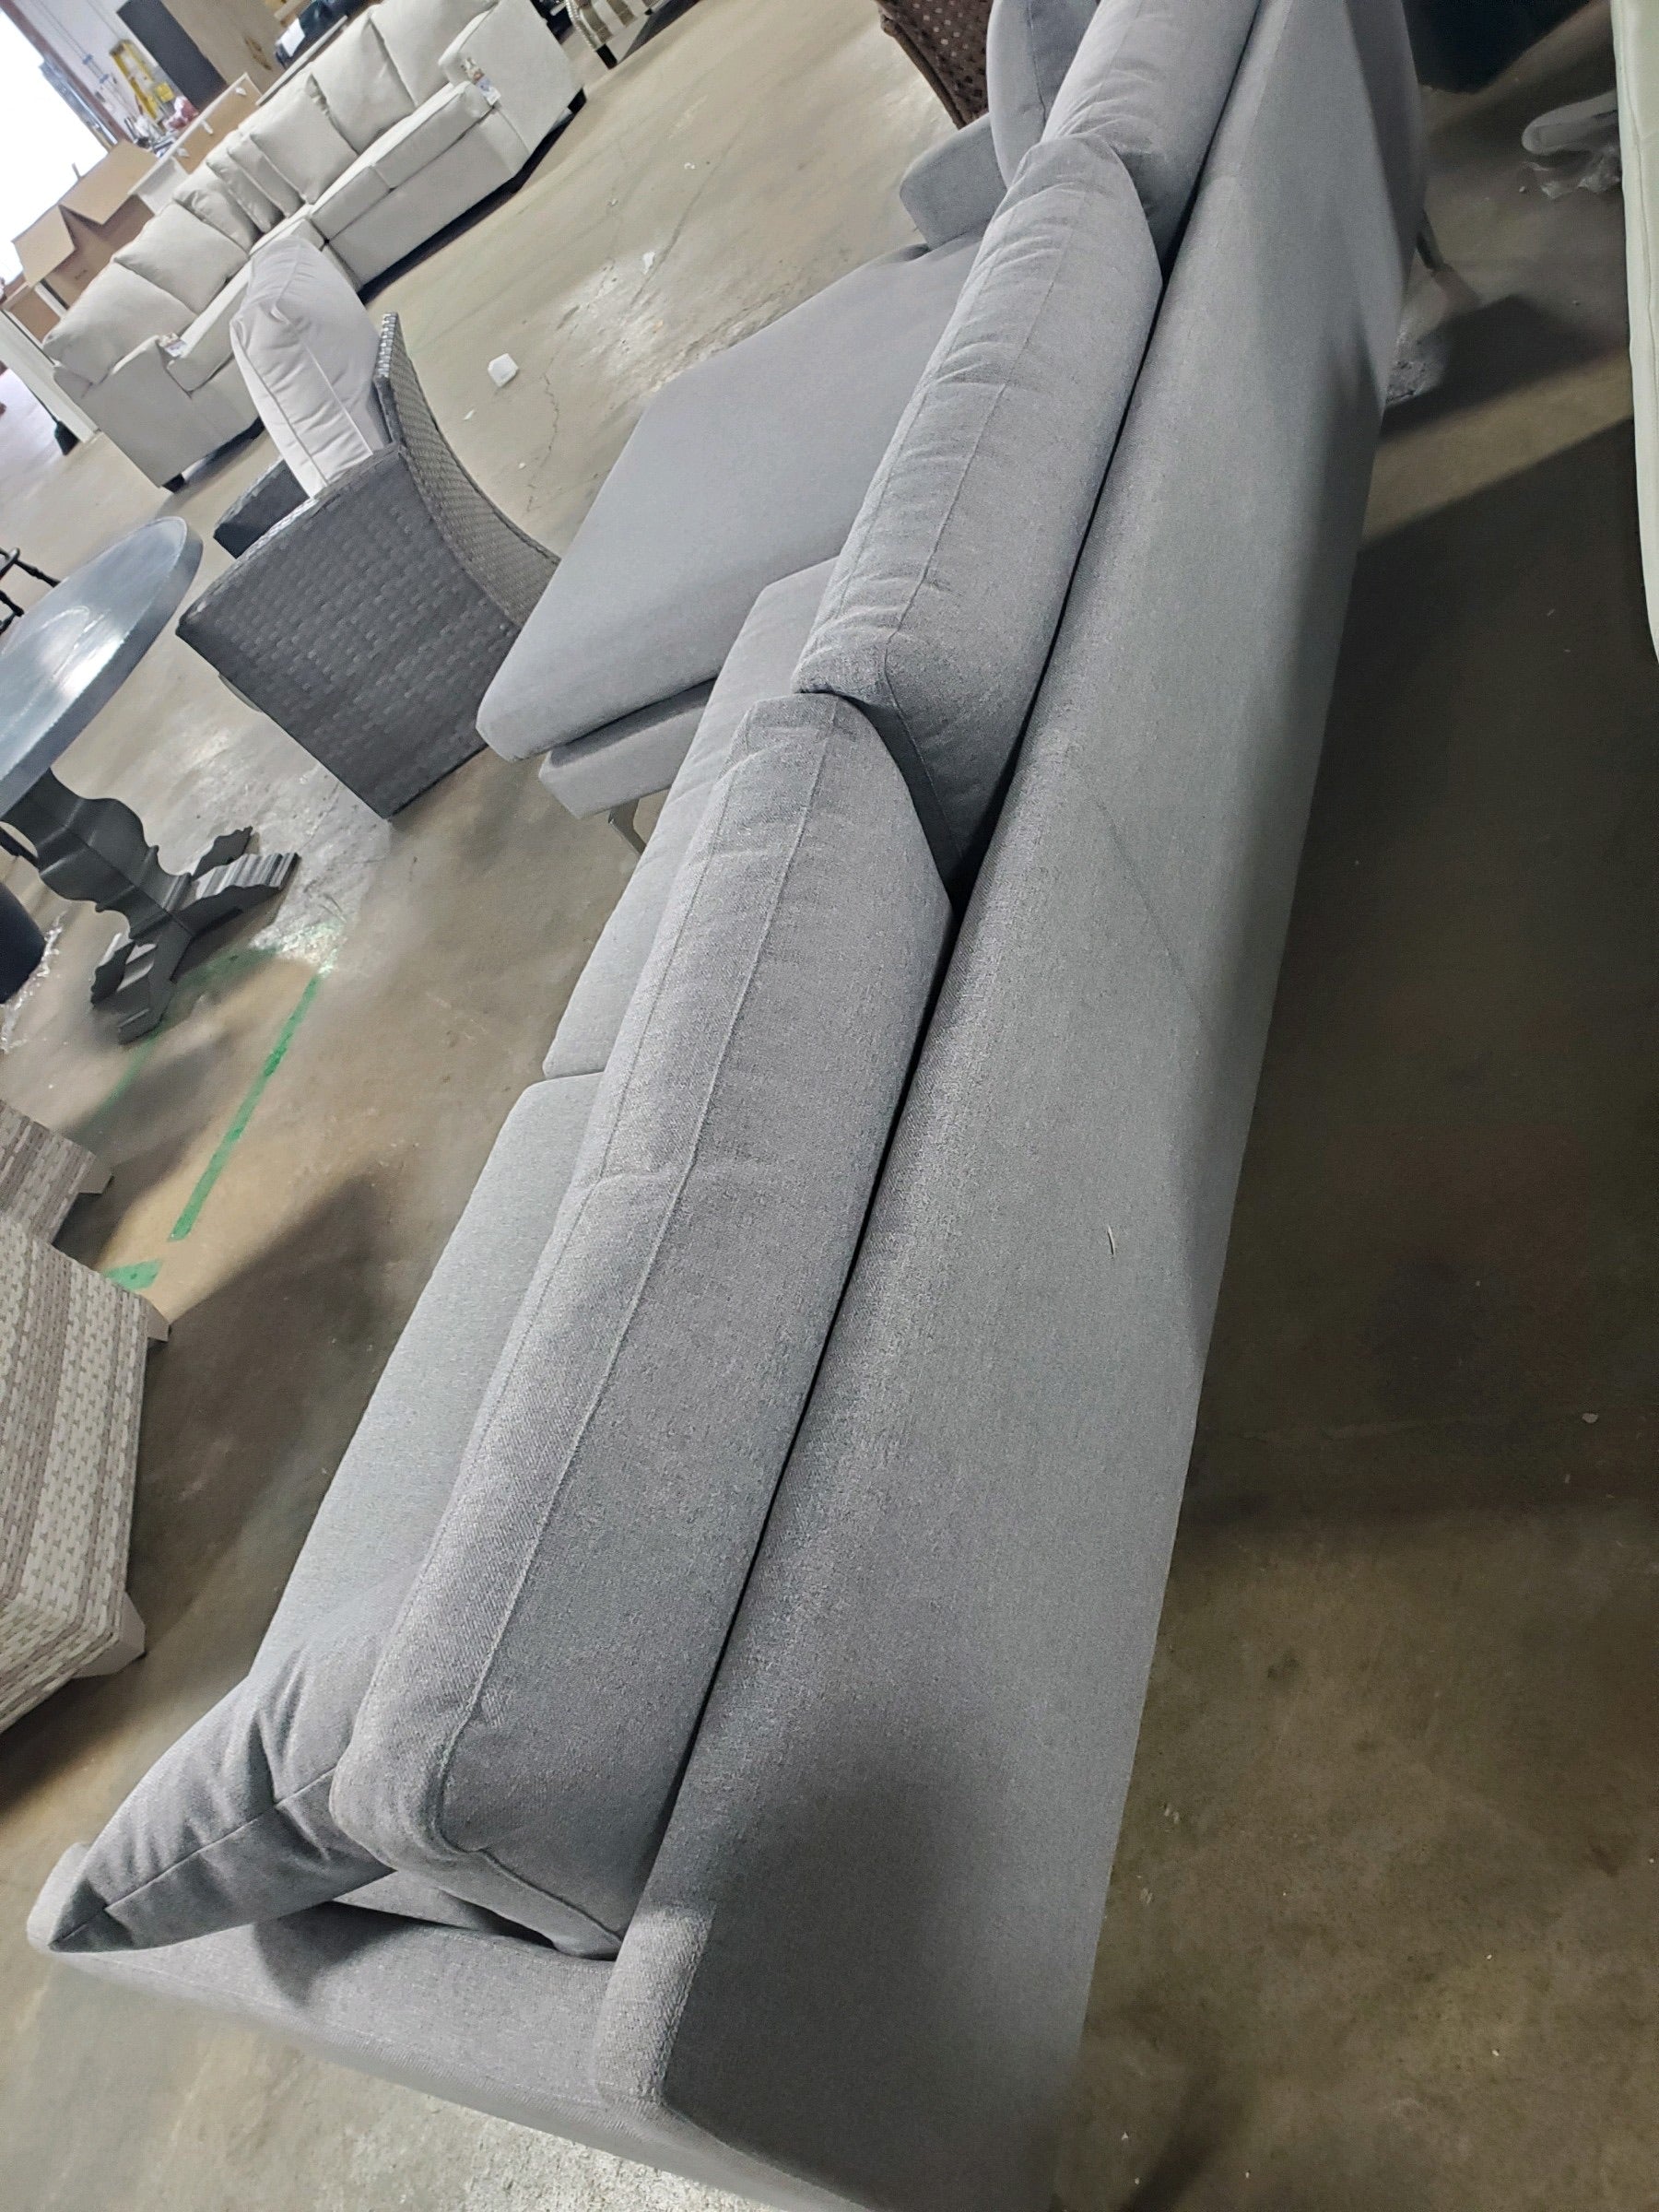 Nova Winter Gray Left Sectional Sofa